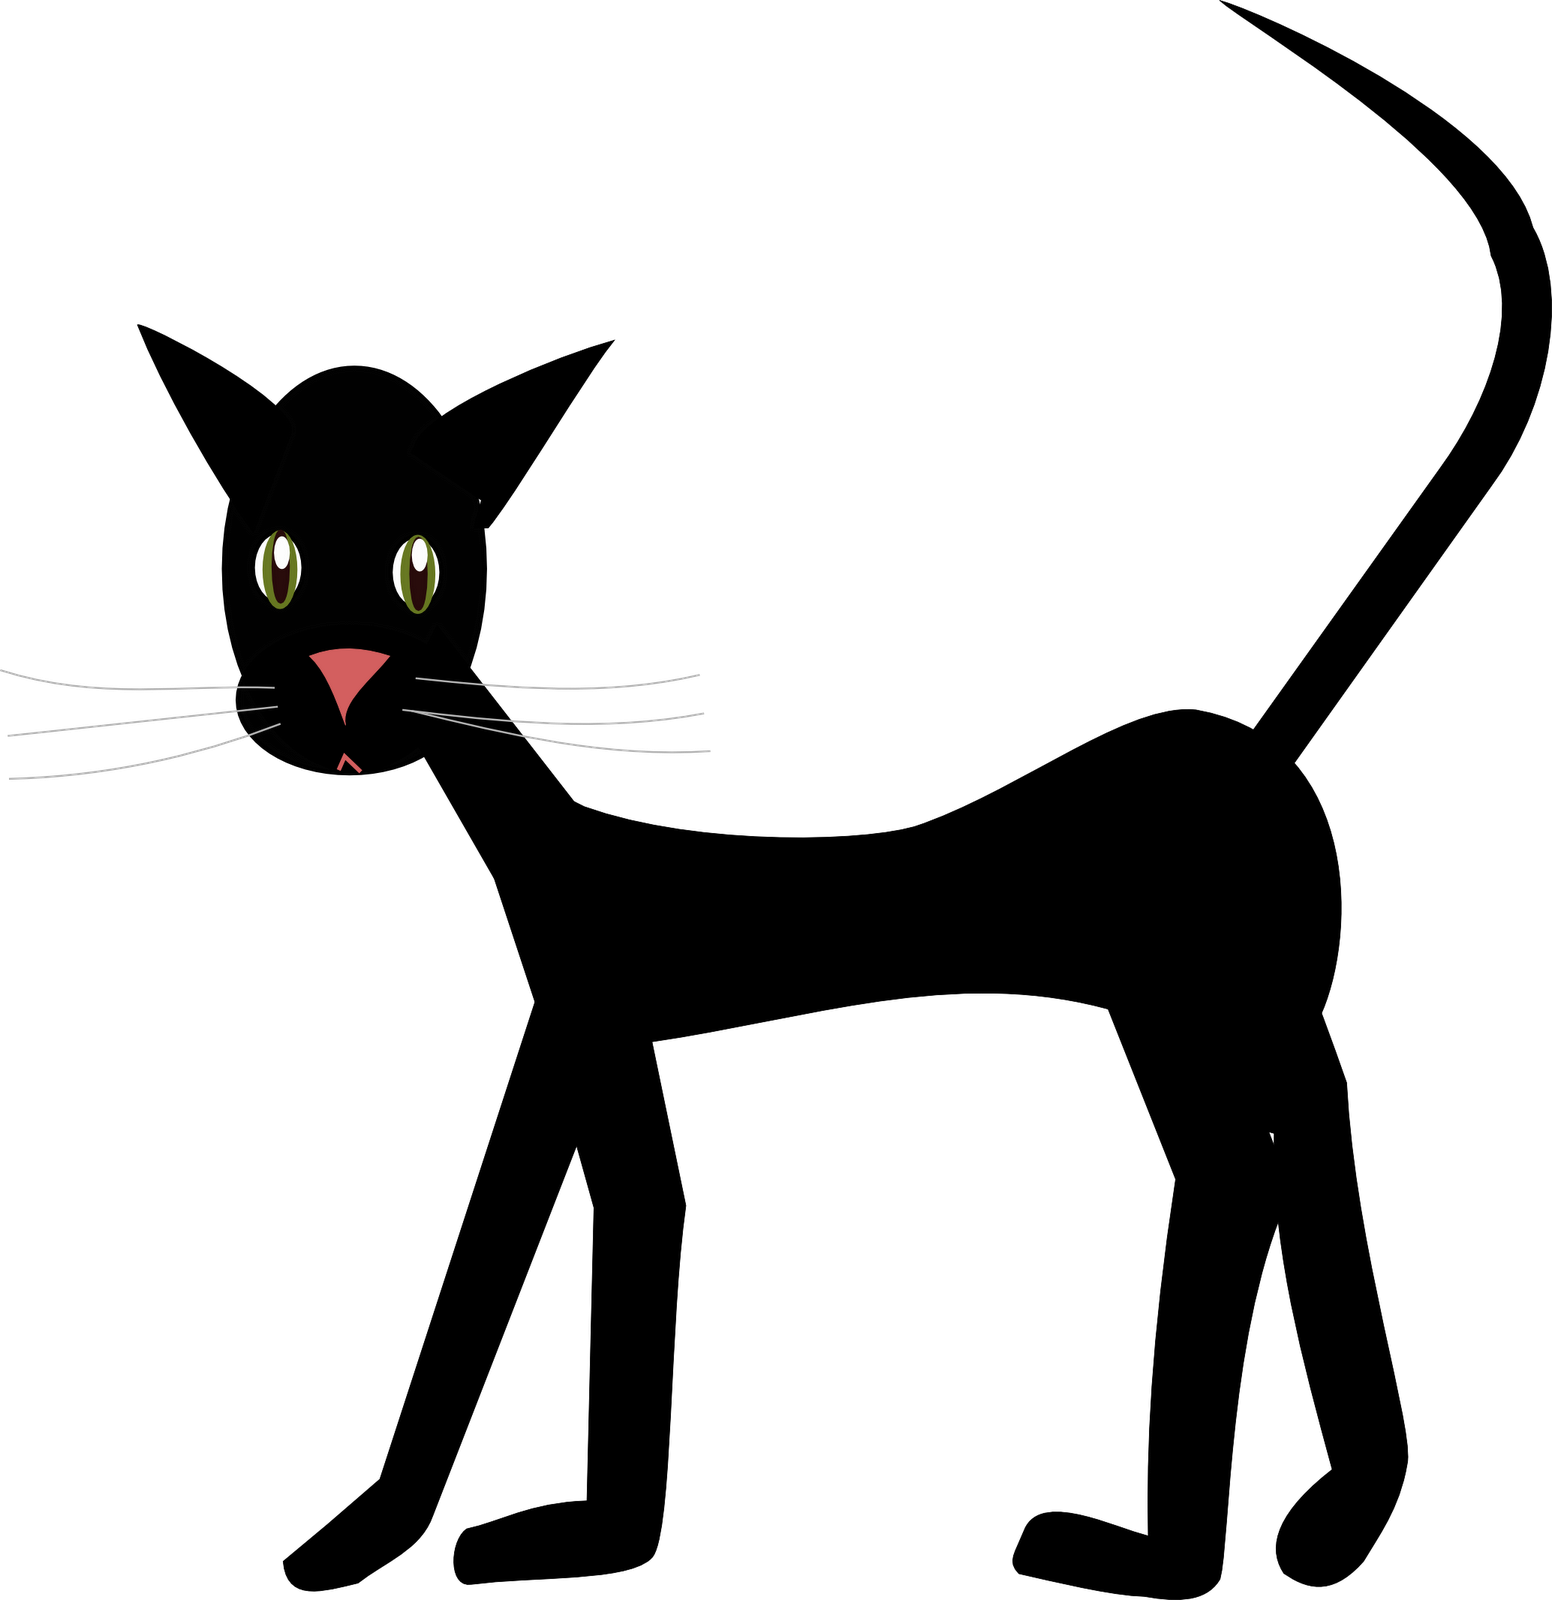 Cat images clip art. Kittens clipart translucent